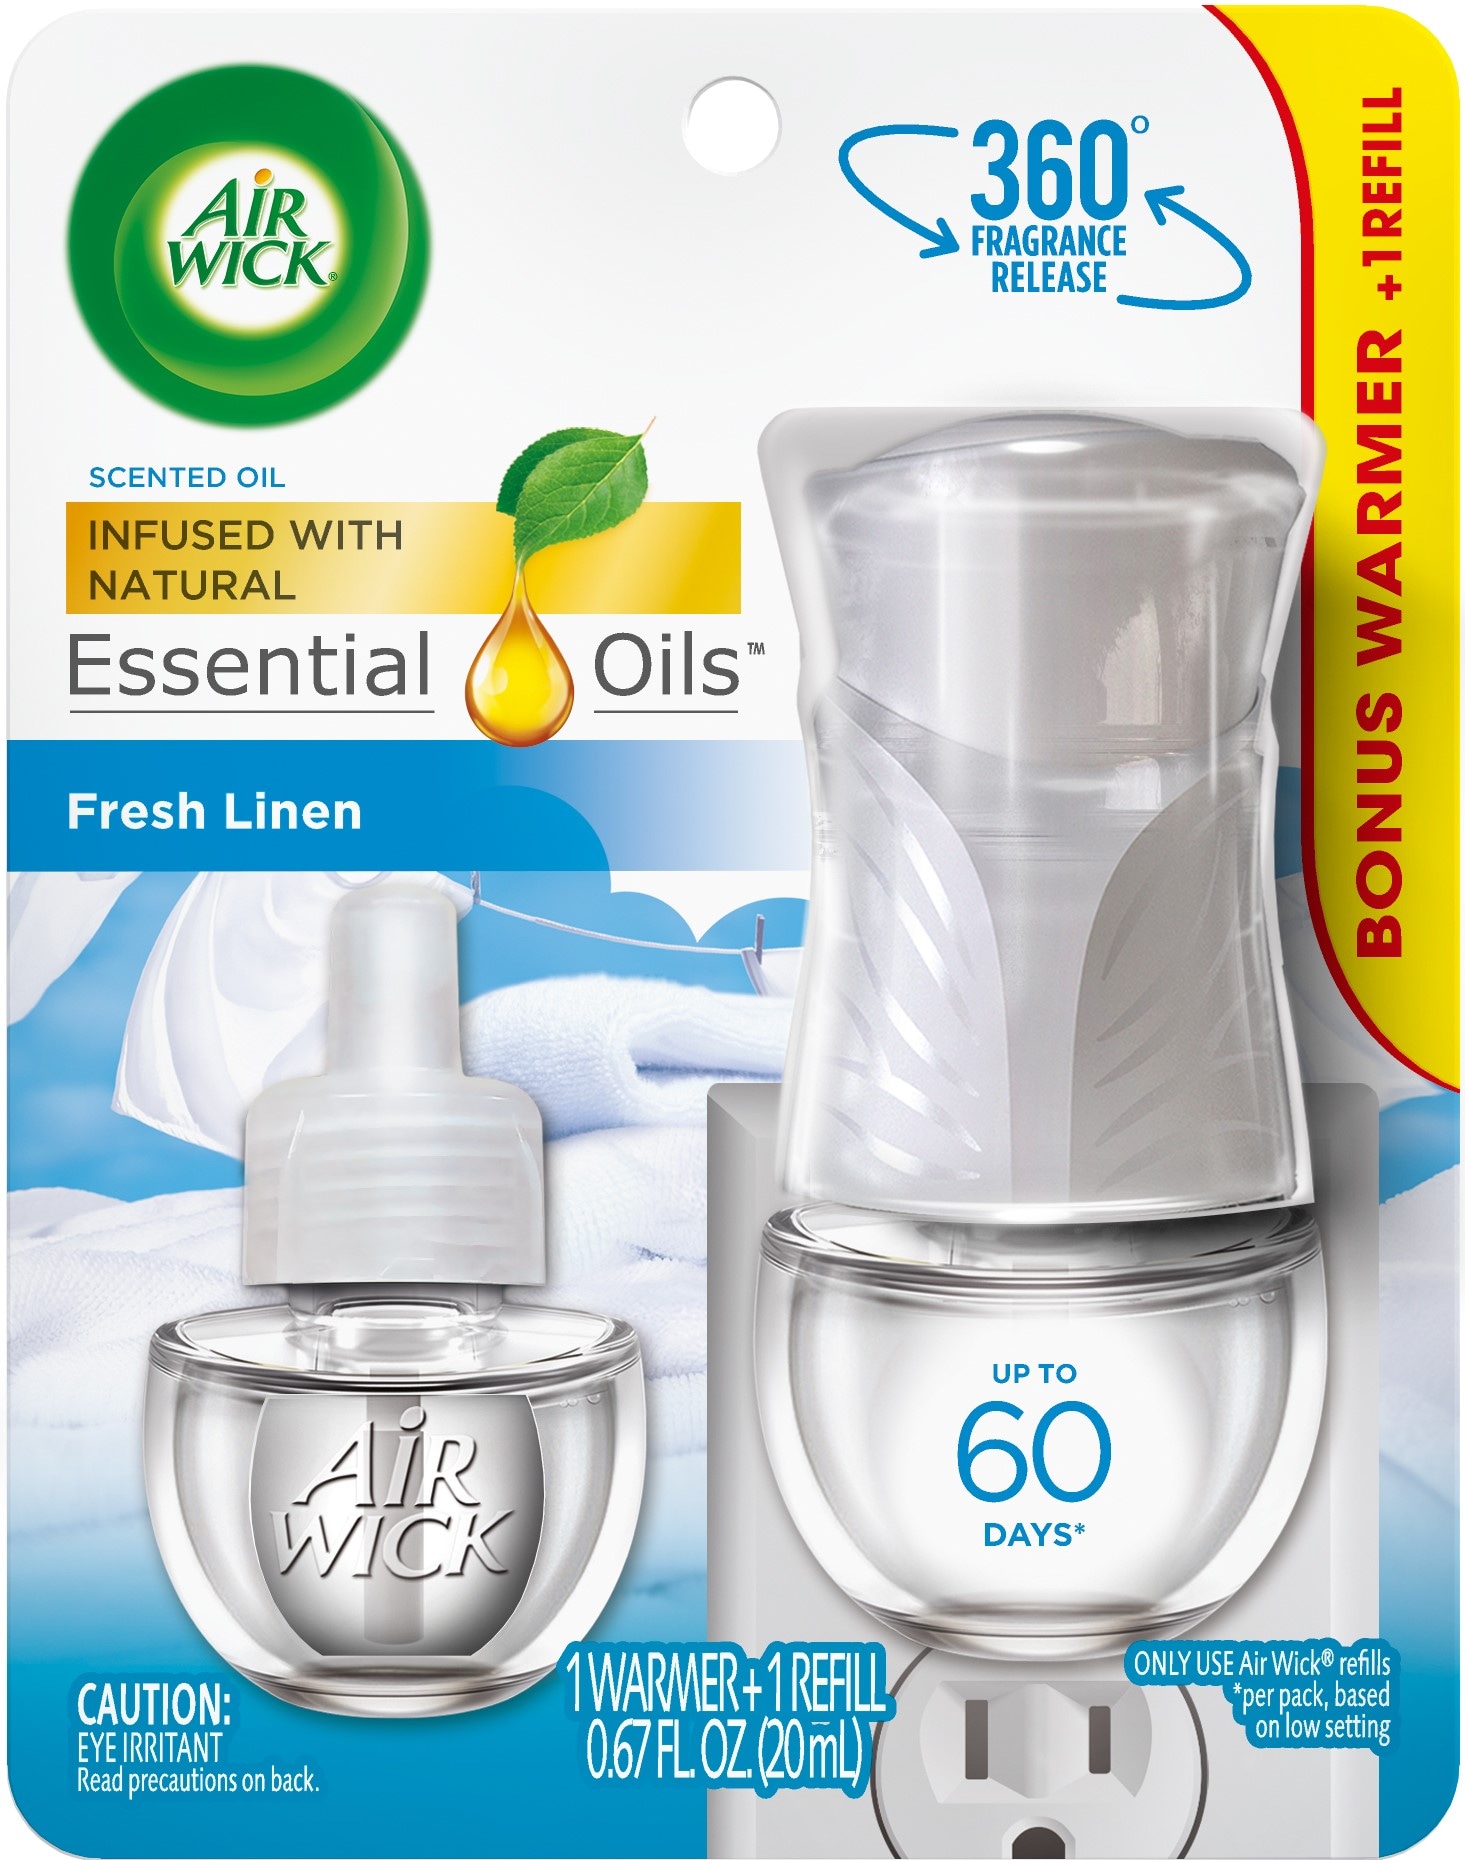 Air Wick Essential Oils Scented Oil Refill, Fresh Linen Fragrance - 3 pack, 0.67 fl oz refills